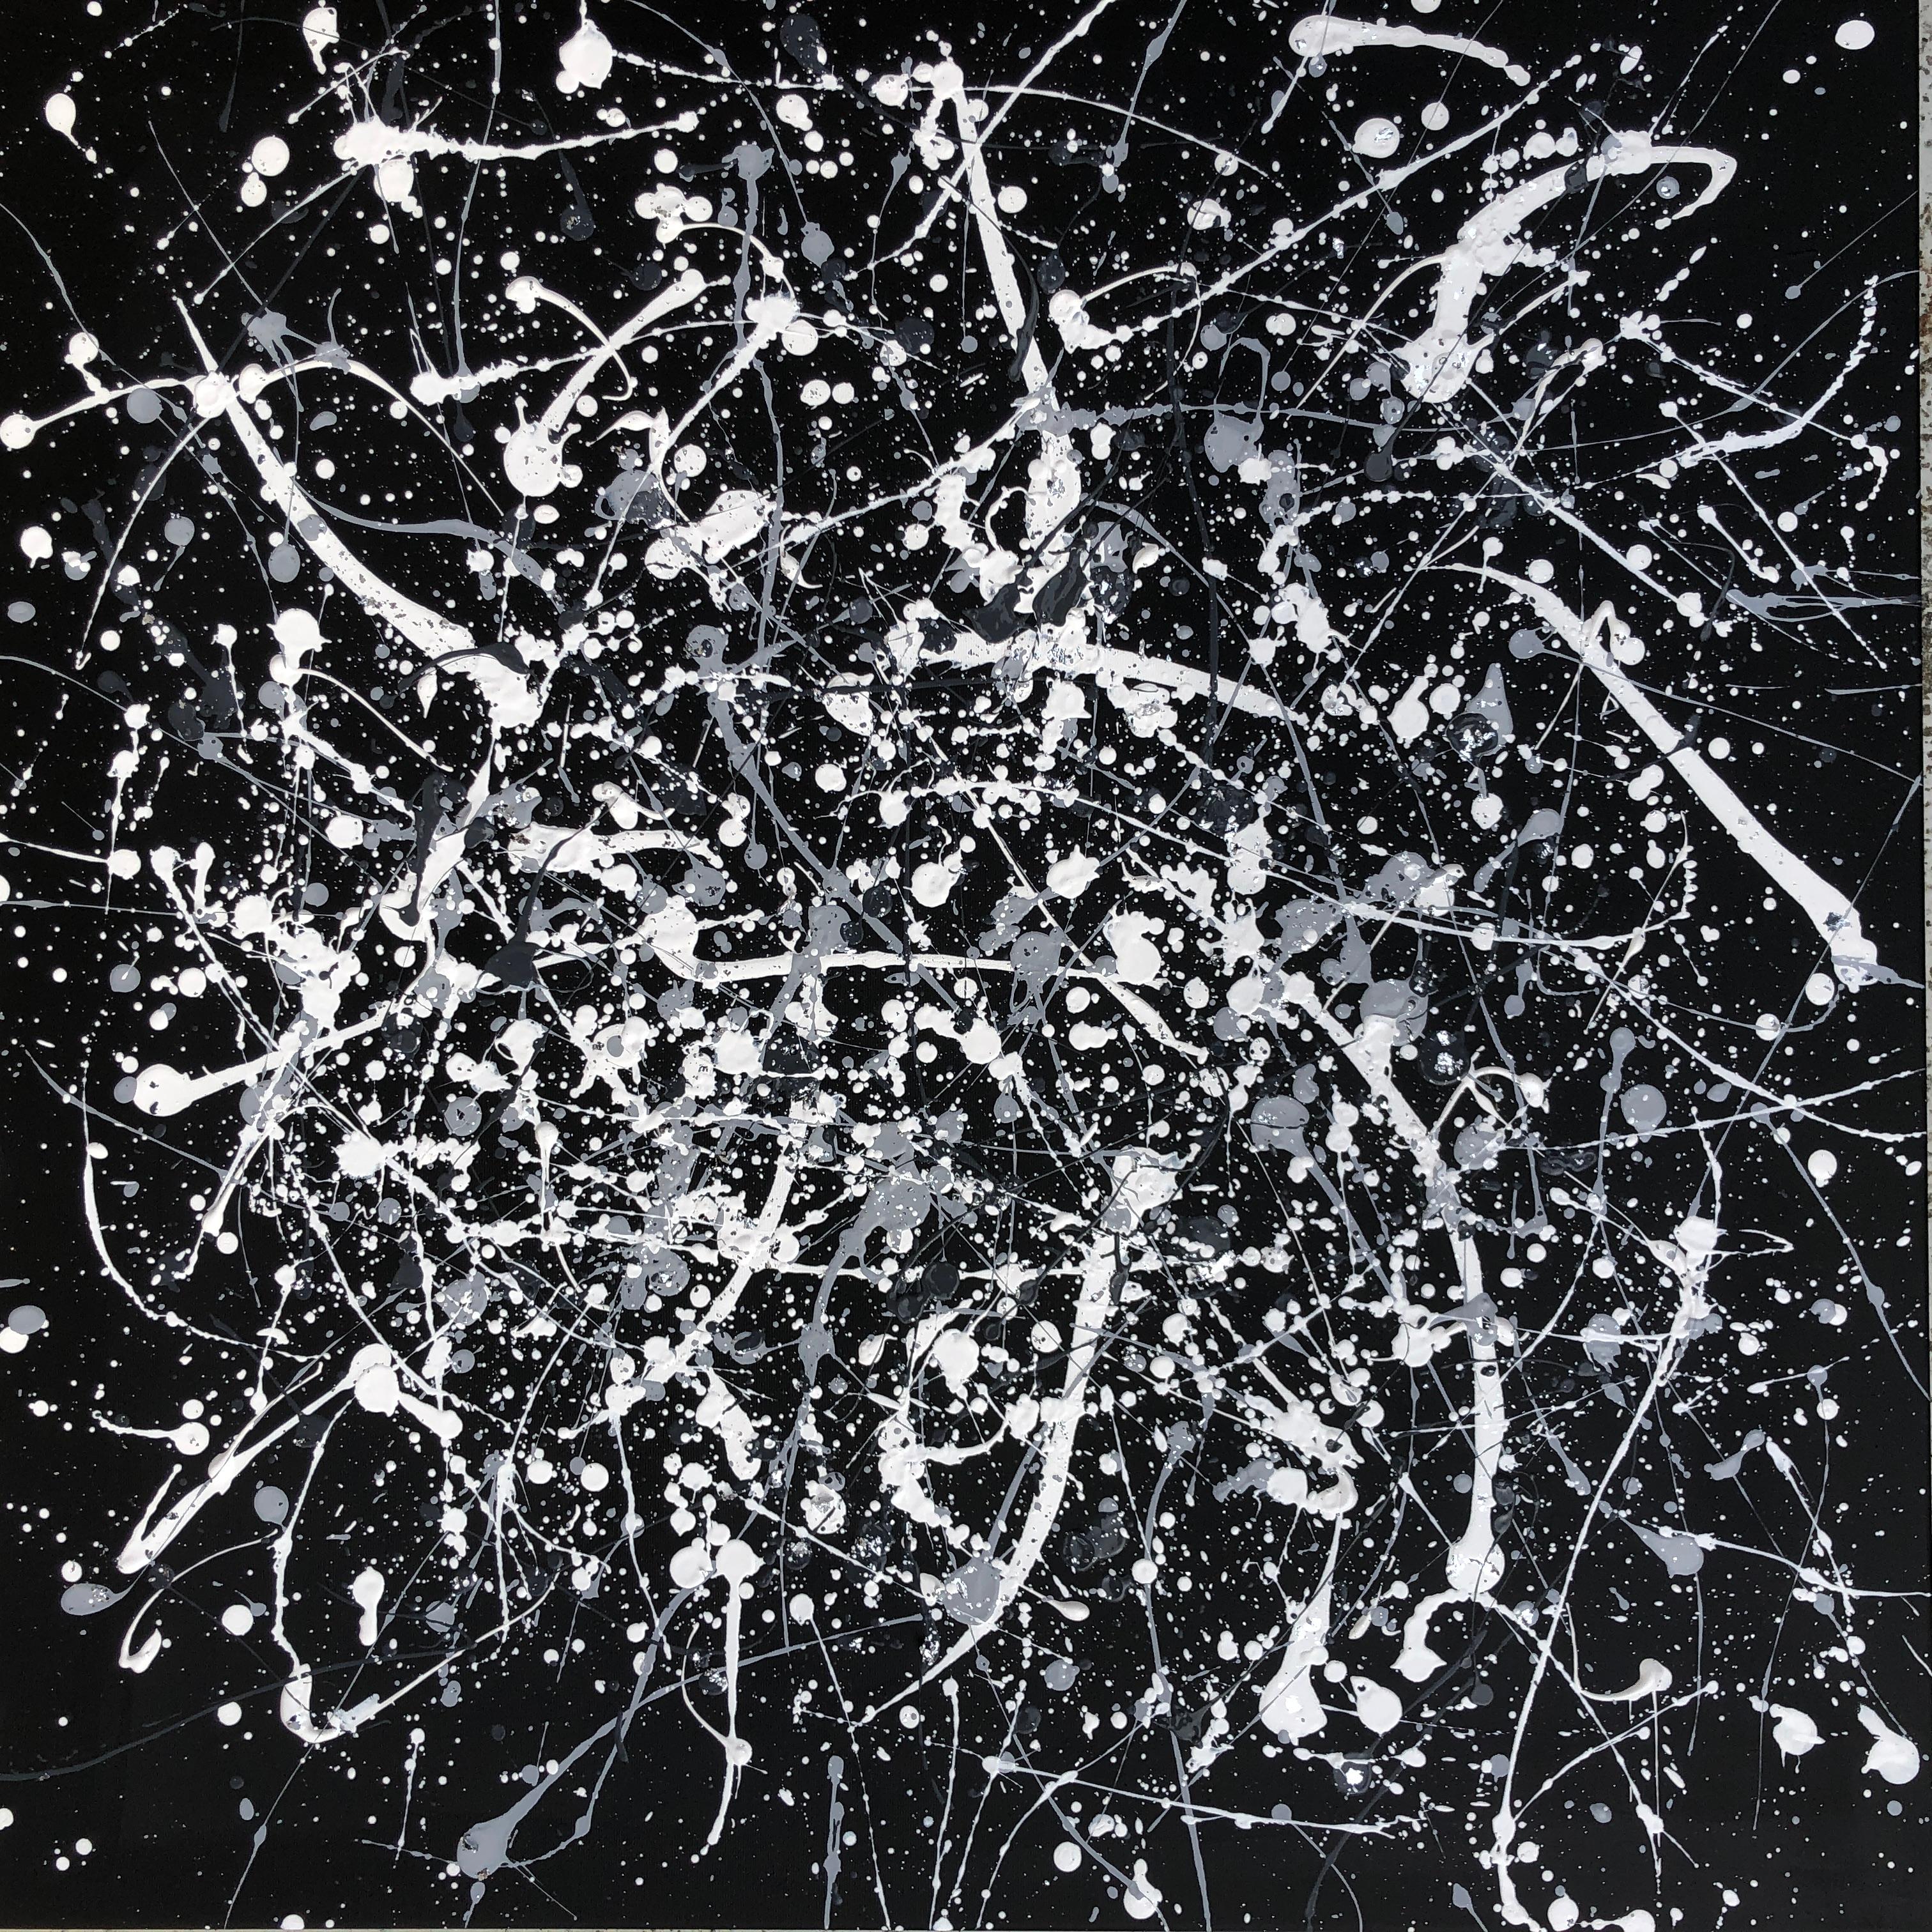 Nataliia Krykun Abstract Painting - Series "Infinite Flight" gray, silber, white, black large abstraction, Pollock 